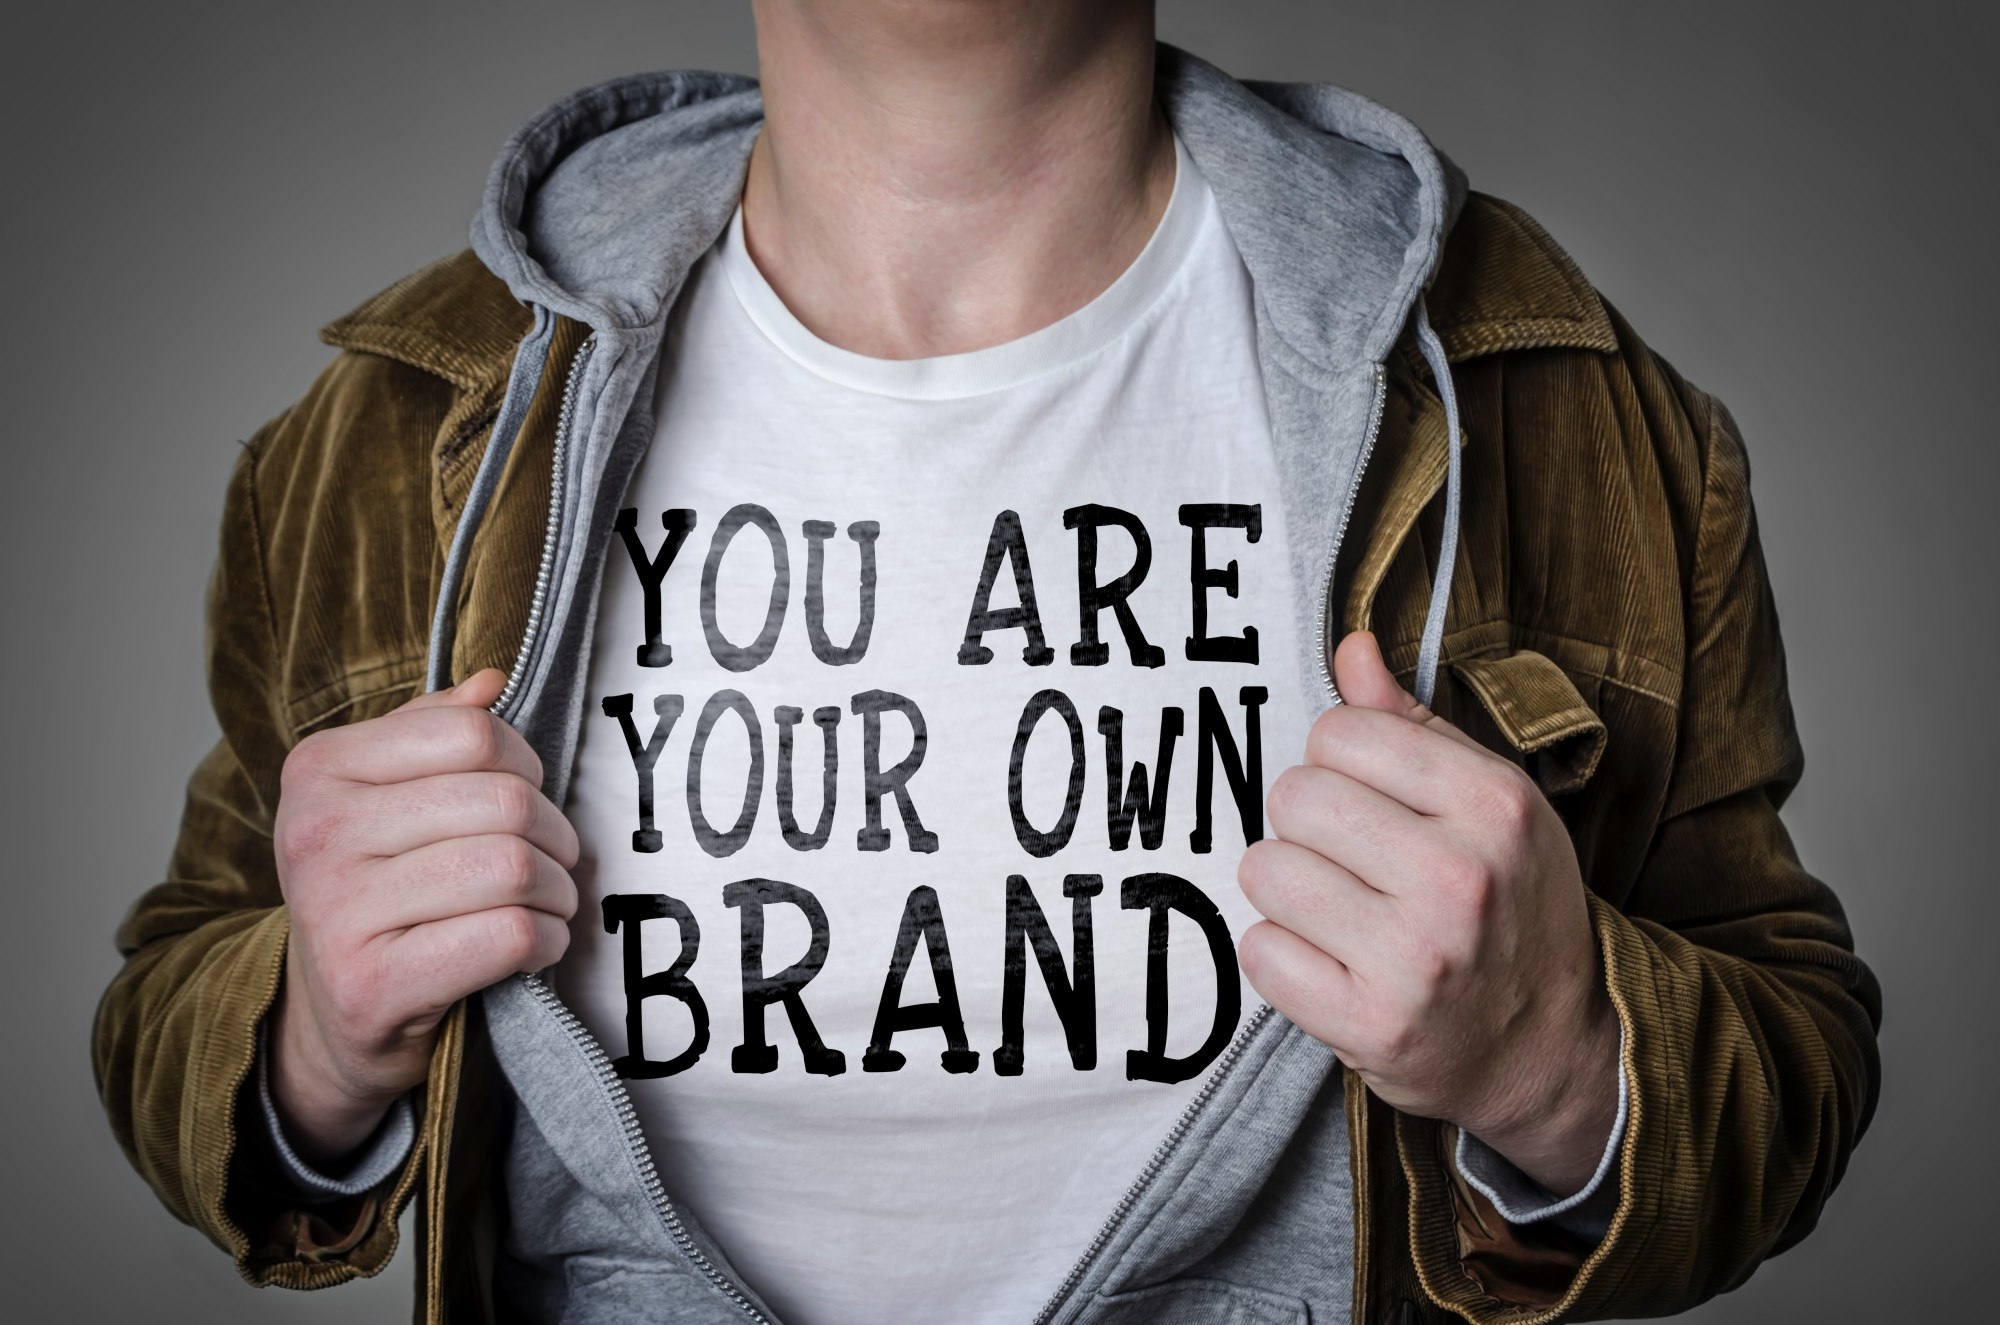 brand identity through clothing